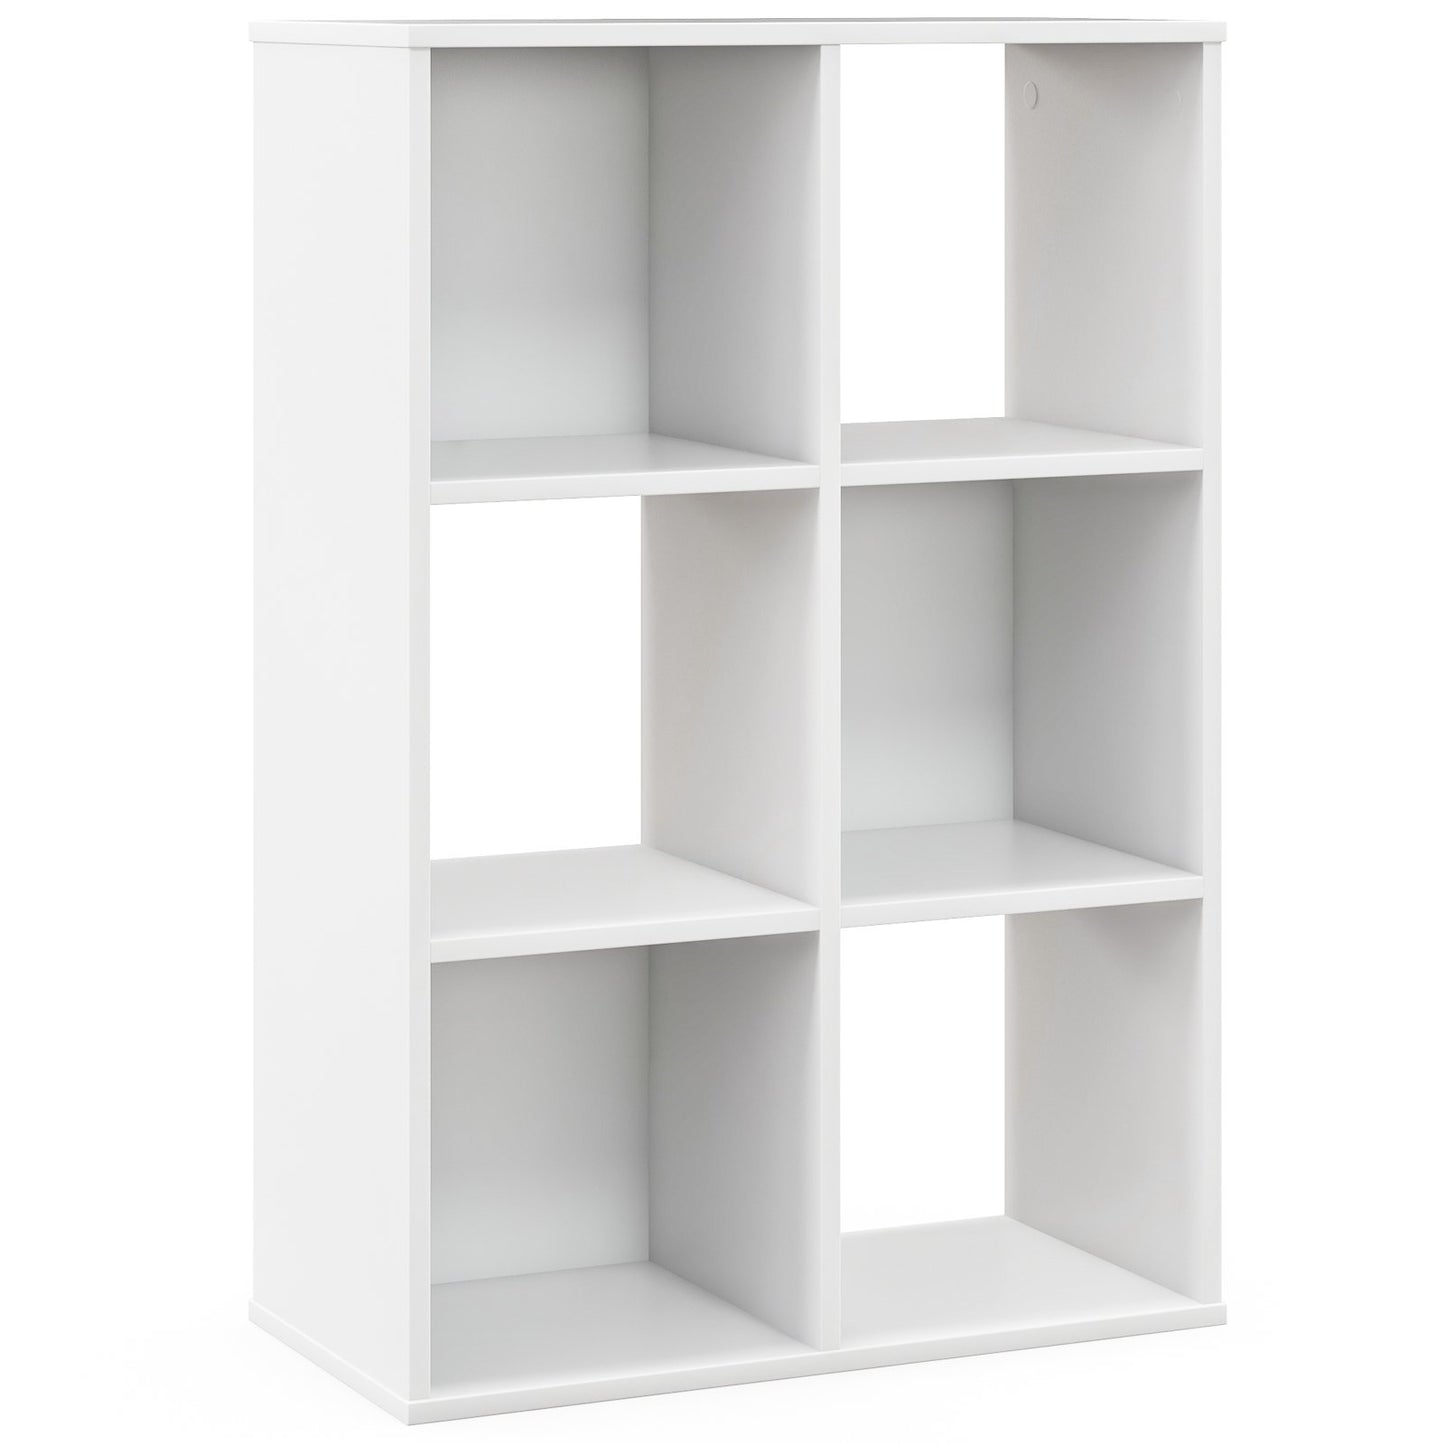 6-Cube Bookshelf 4-Tier Floor Display Shelf, White